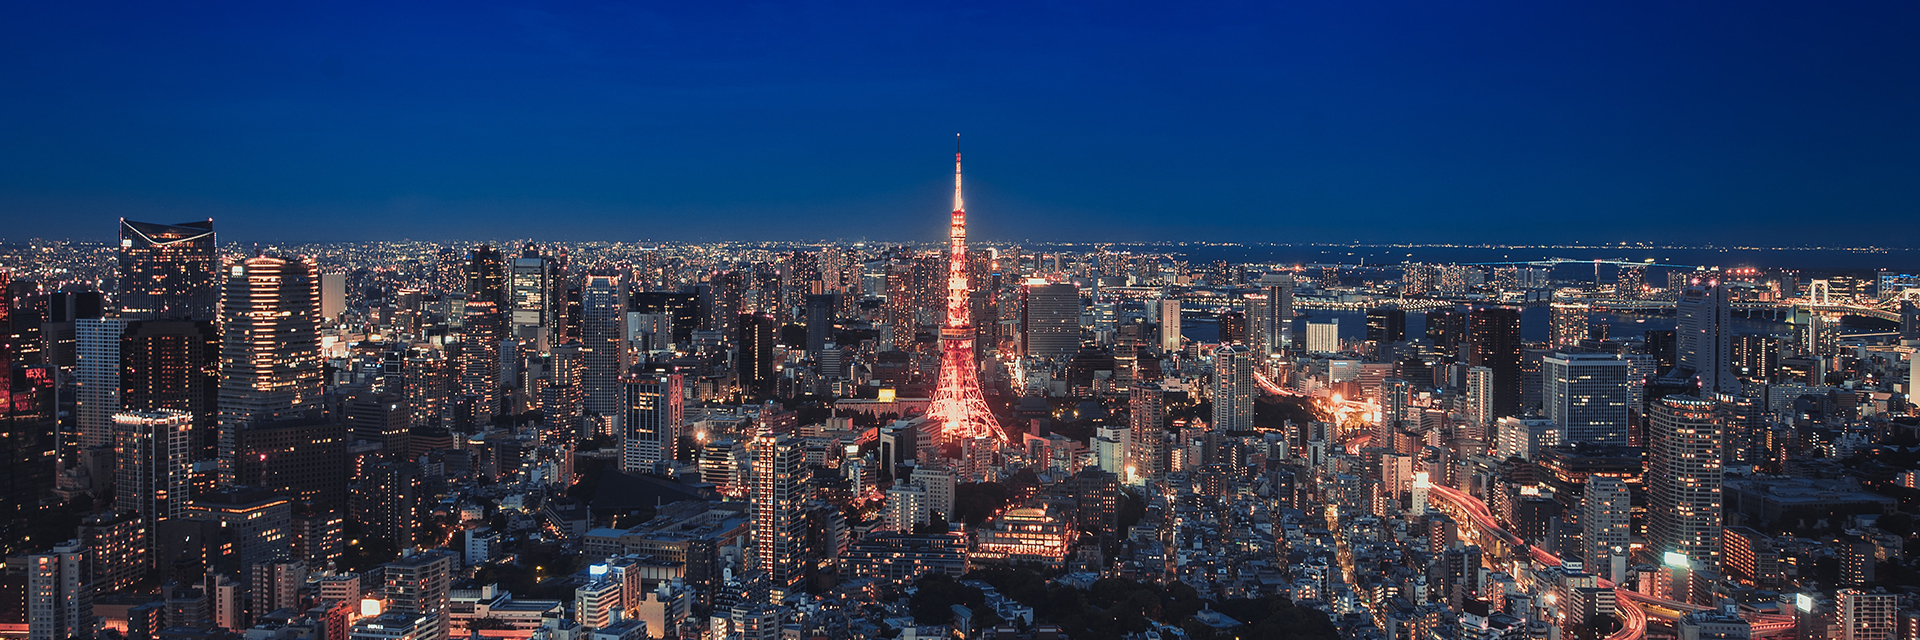 Tokyo skyline at night. Photo by Freeman Zhou on Unsplash